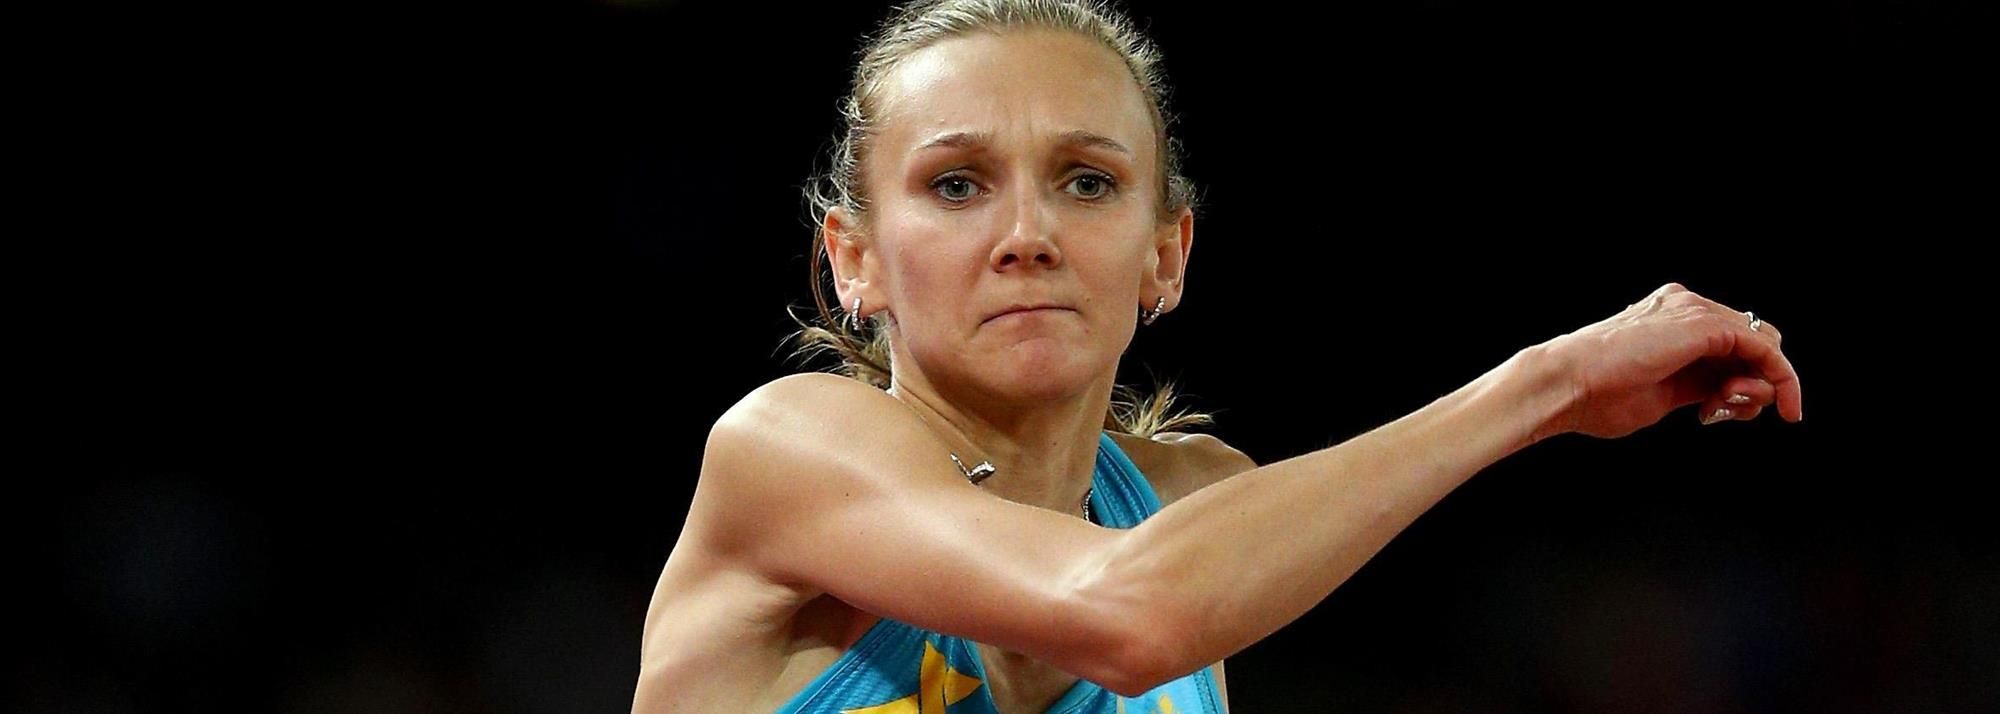 Olga RYPAKOVA | Profile | World Athletics